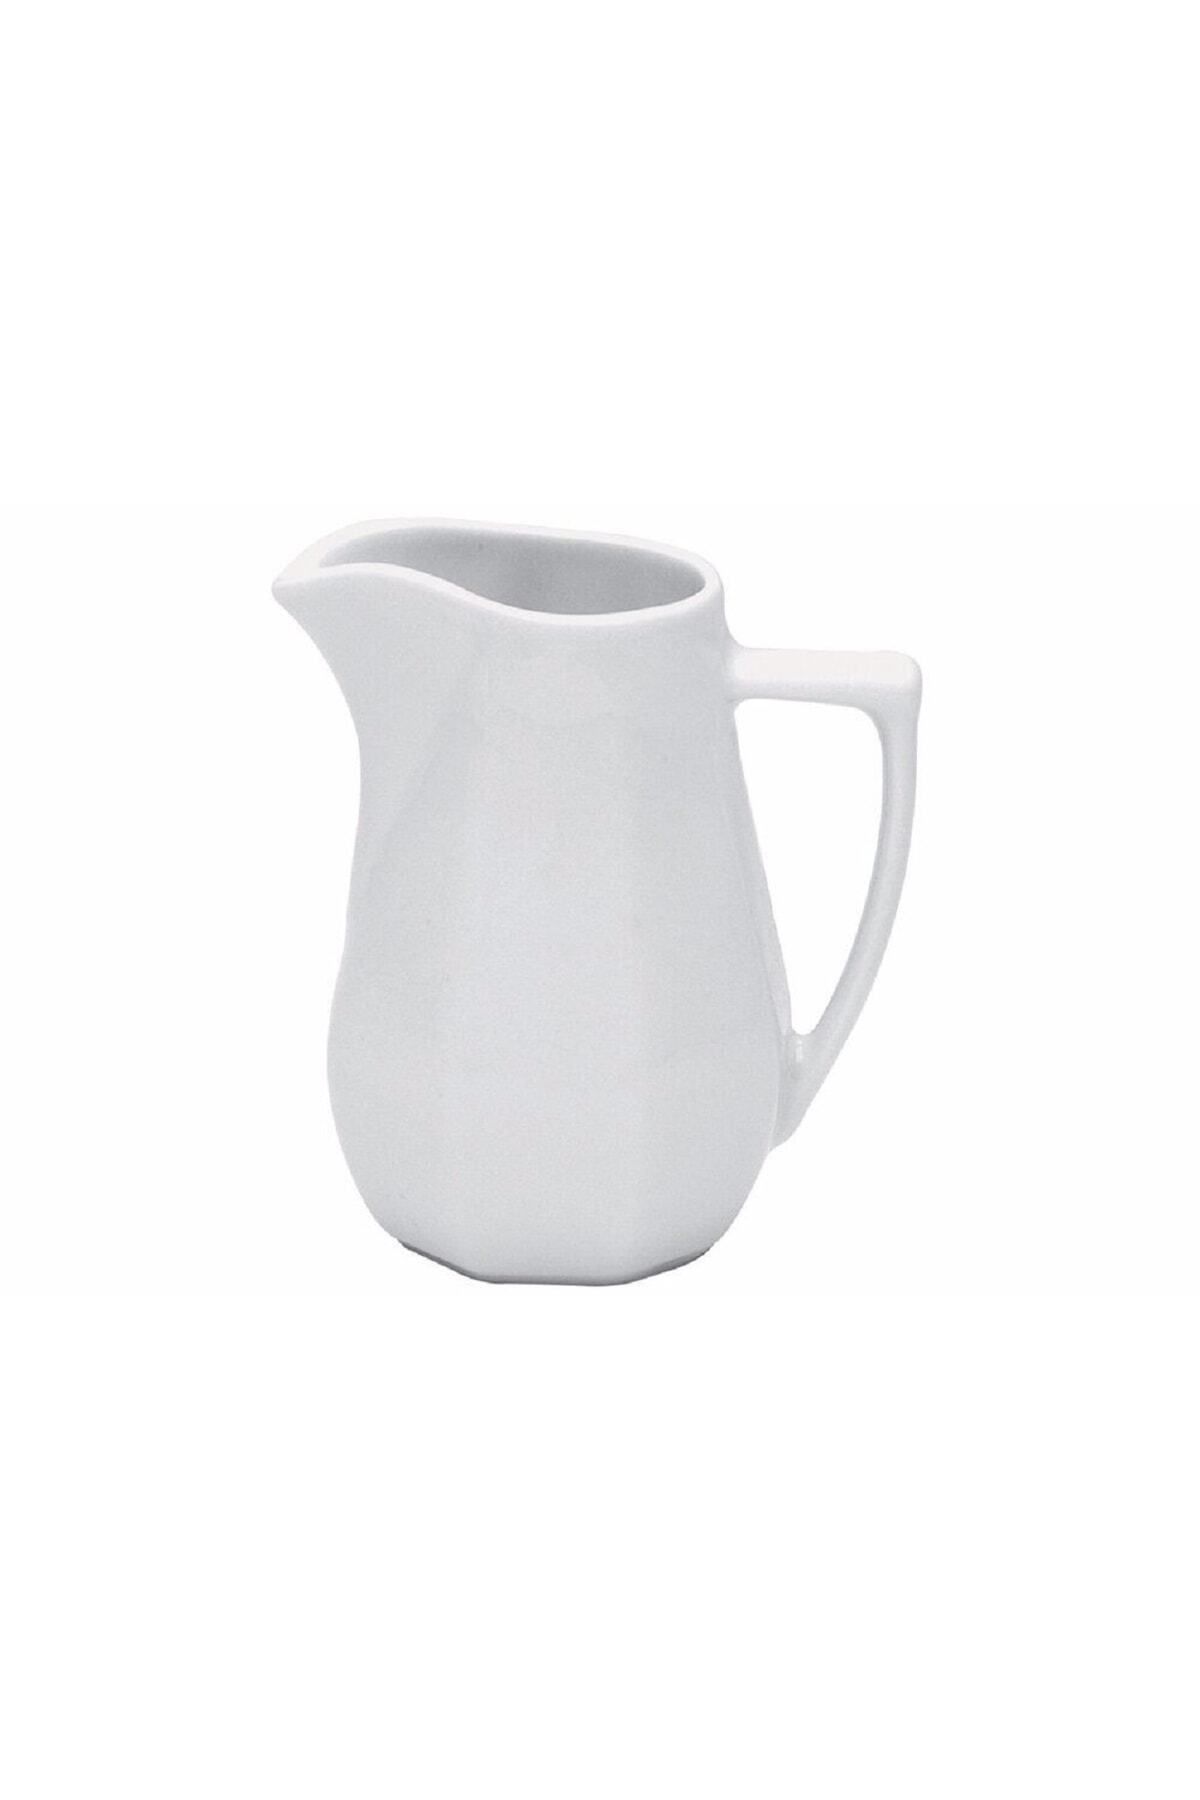 Zeze Home Porselen Süt Potu Sütlük - Kahve Potu Sosluk - Porselen Sürahi 590 Cc